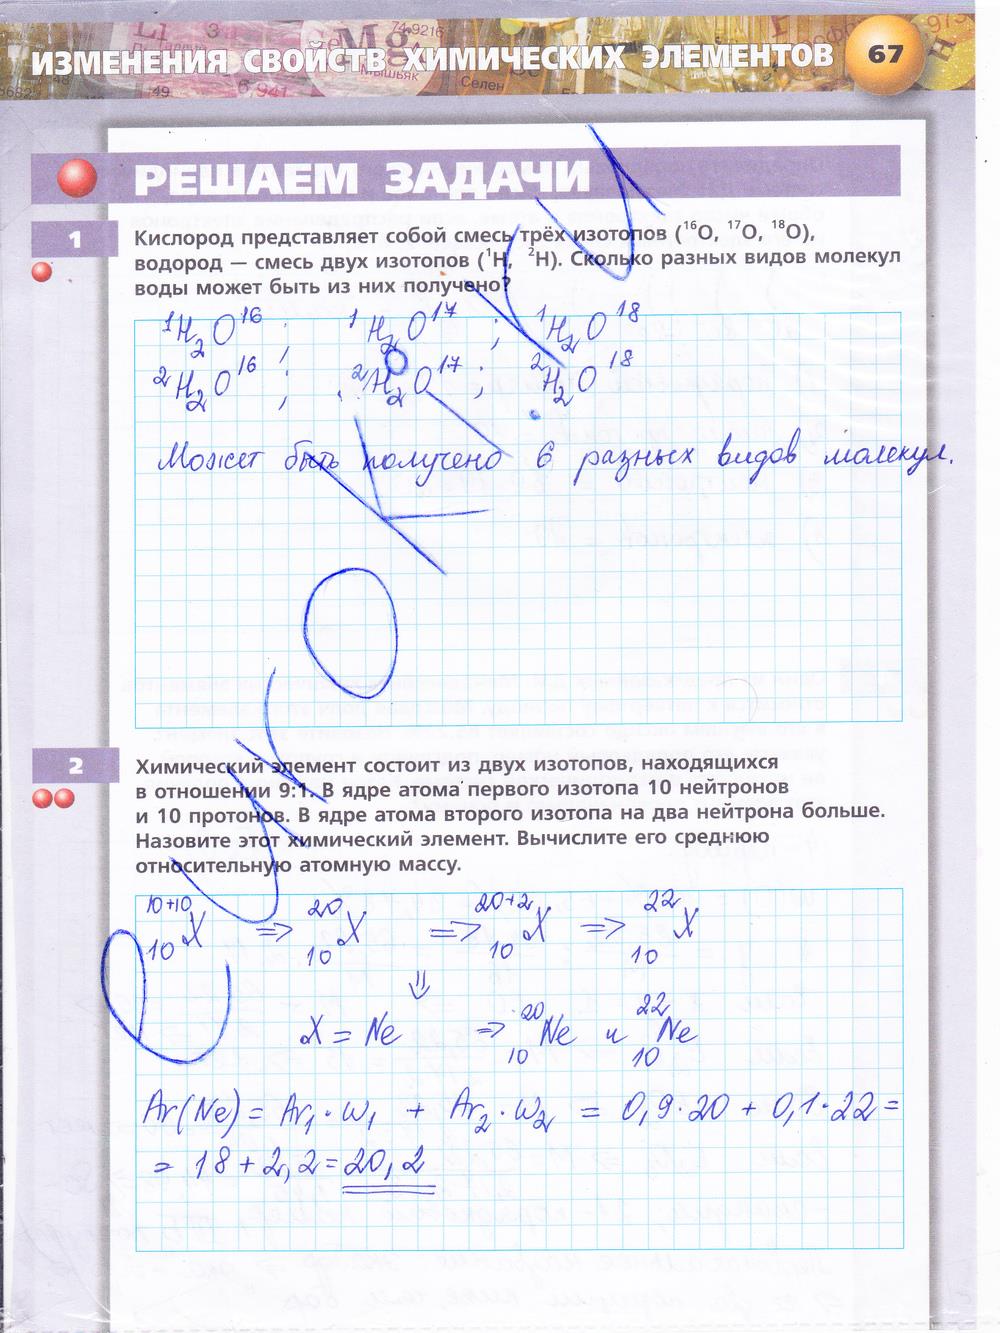 гдз 8 класс тетрадь-тренажёр страница 67 химия Гара